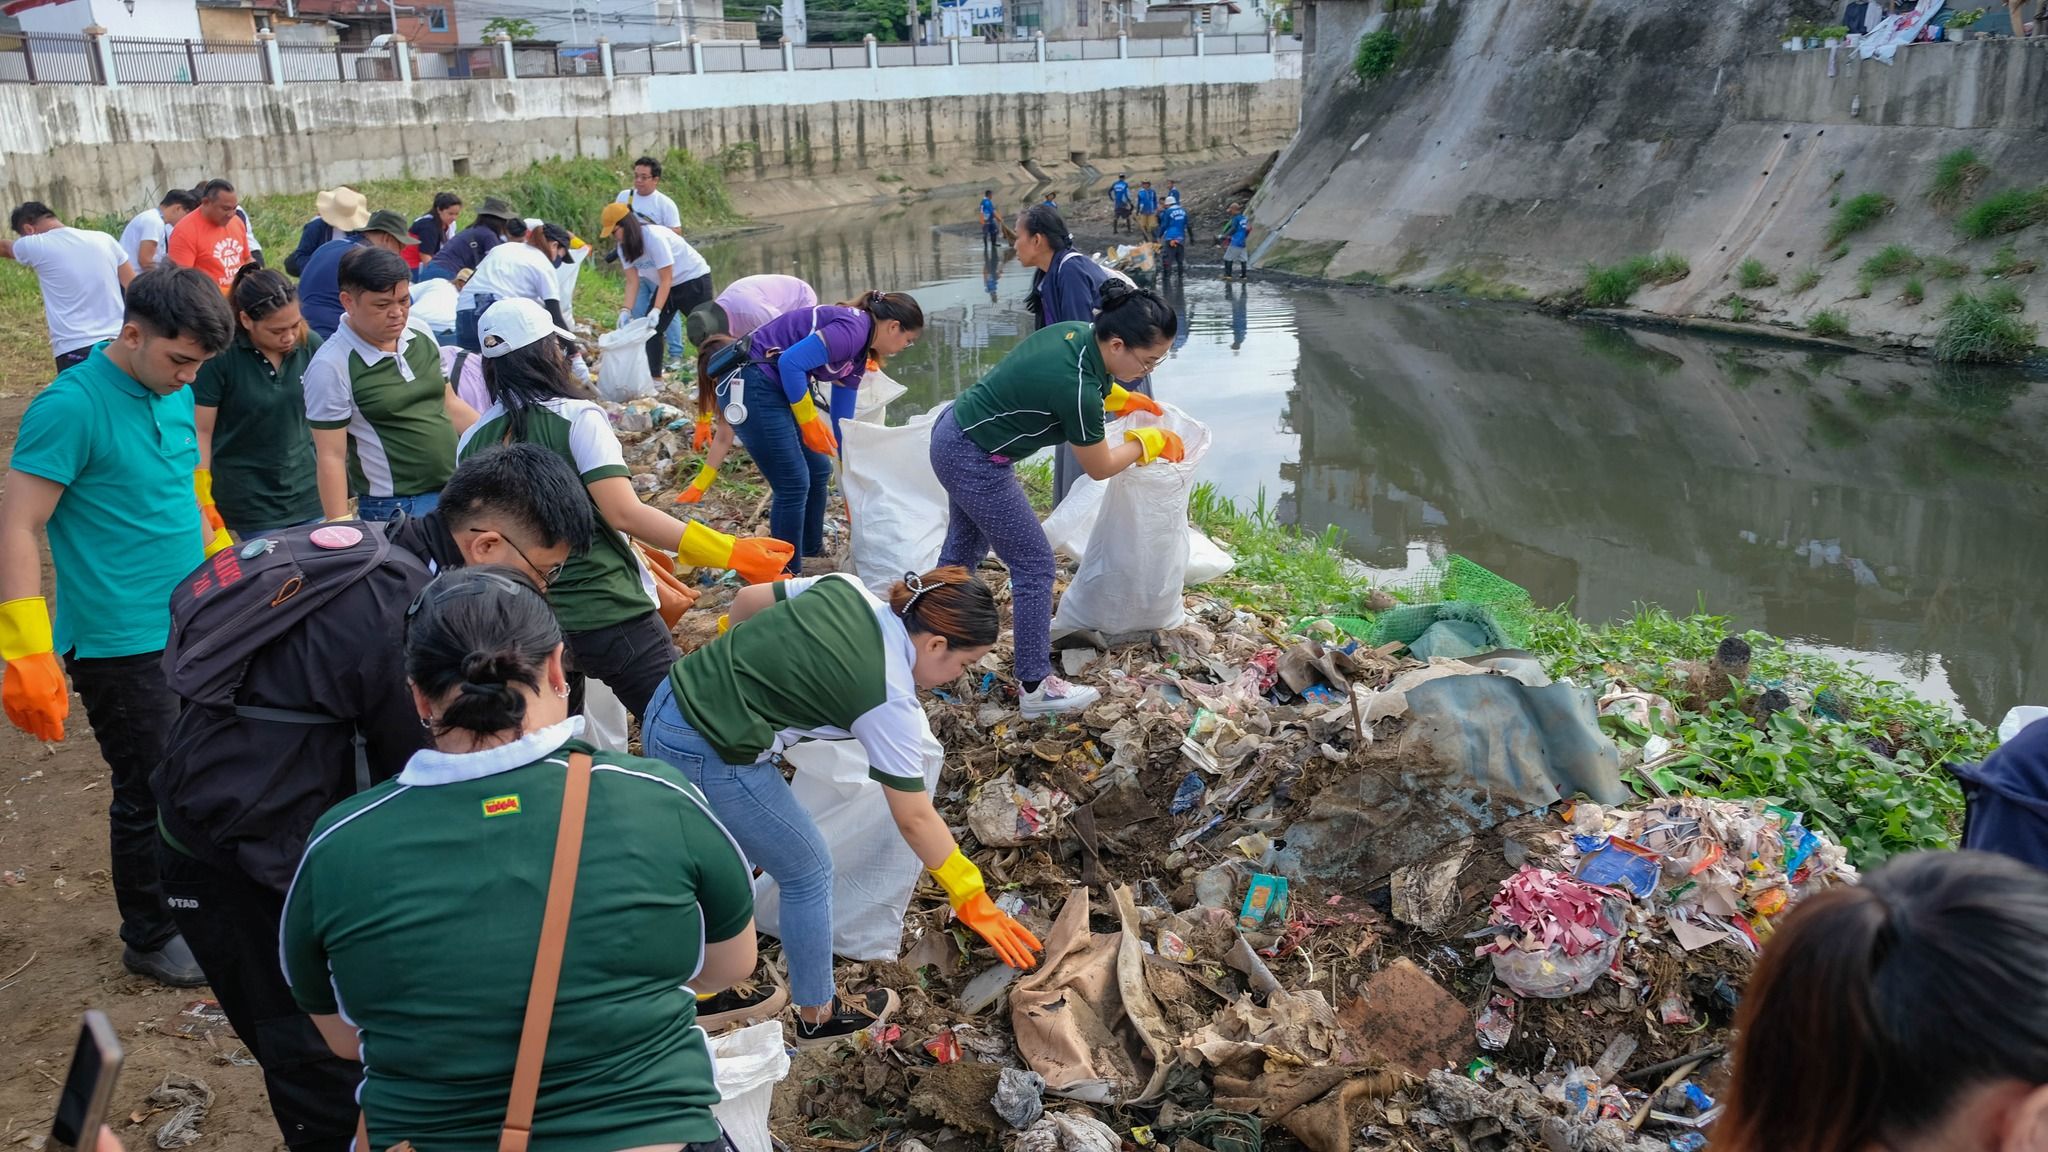 Solid waste recovery efforts in Biñan City